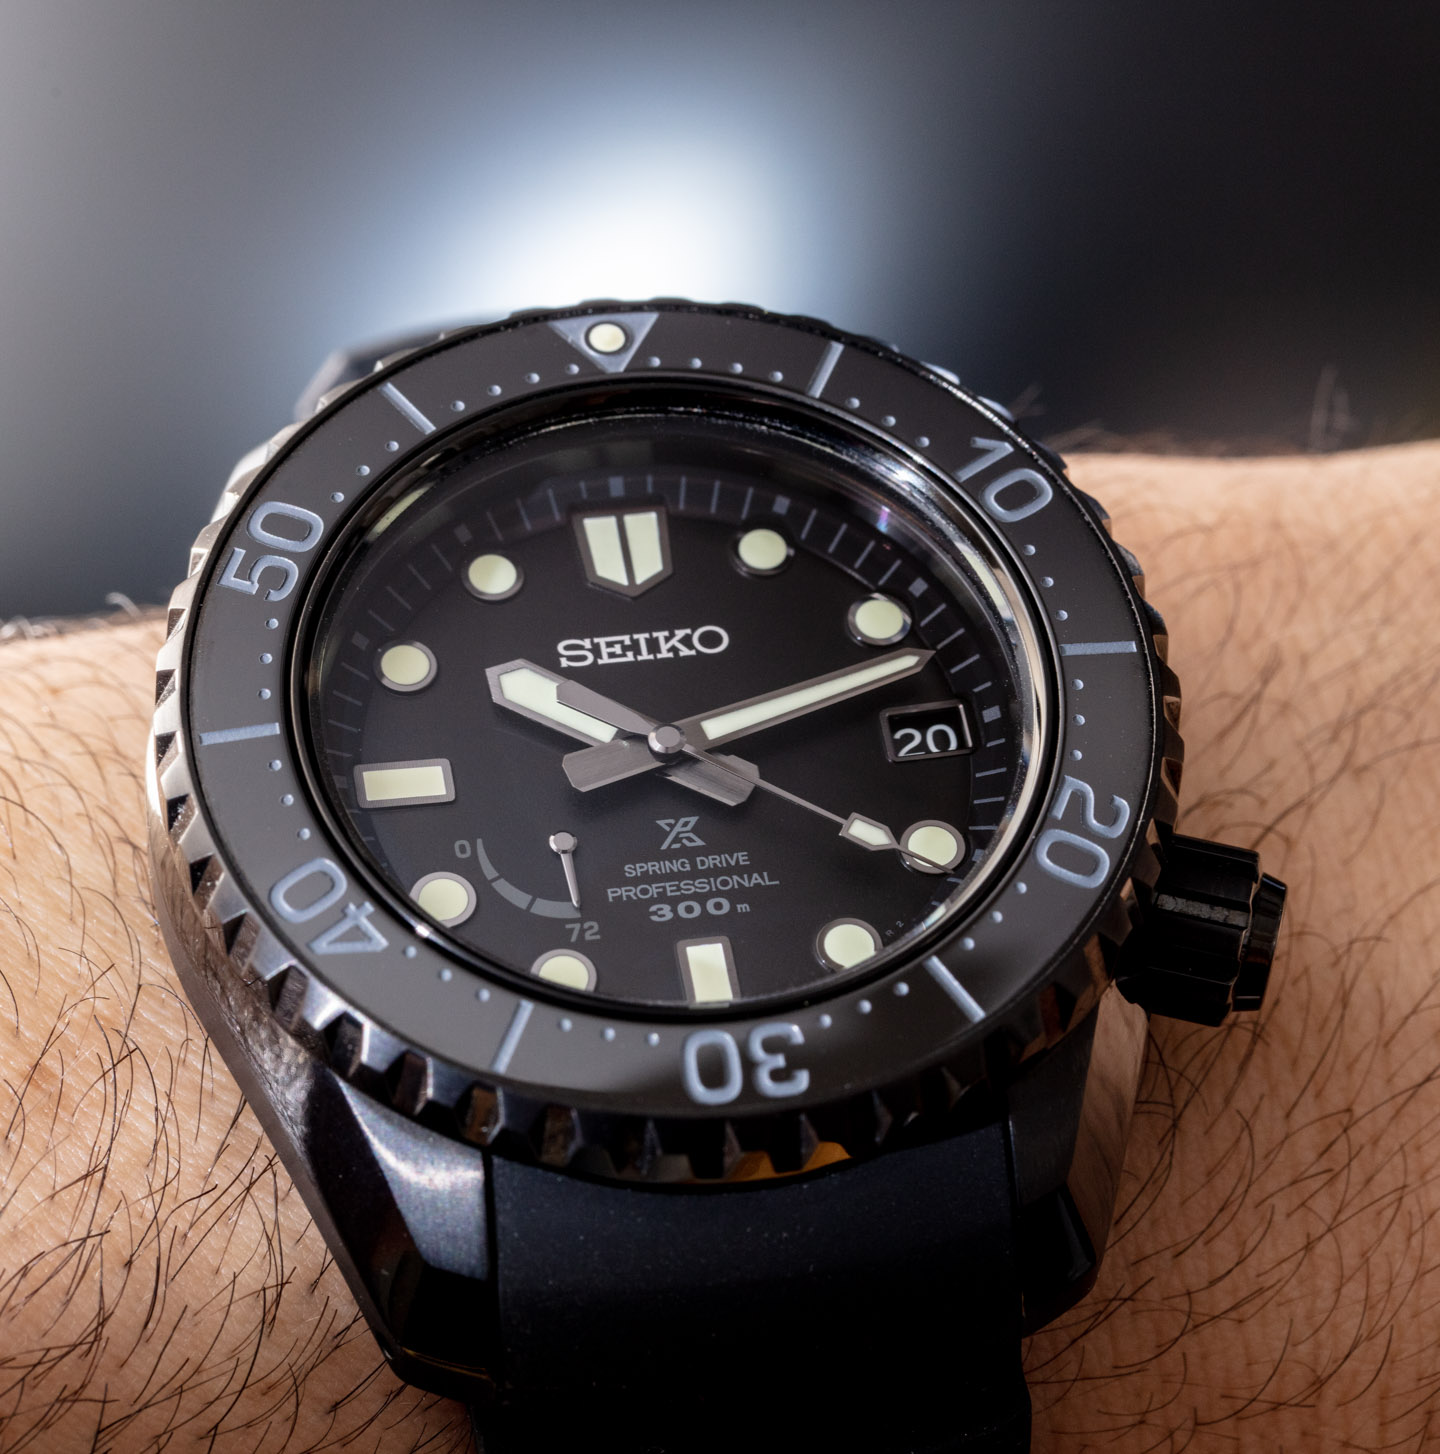 Watch Review: Seiko Prospex LX SNR031 Titanium Diver | aBlogtoWatch